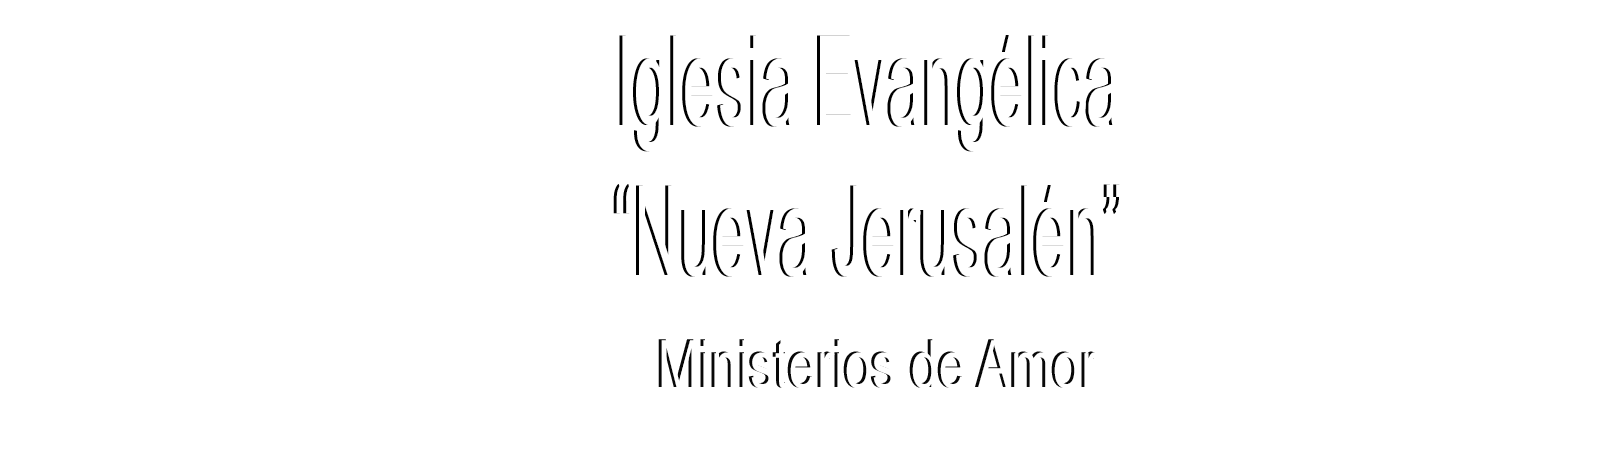 Iglesia Evangélica "Nueva Jerusalén" 